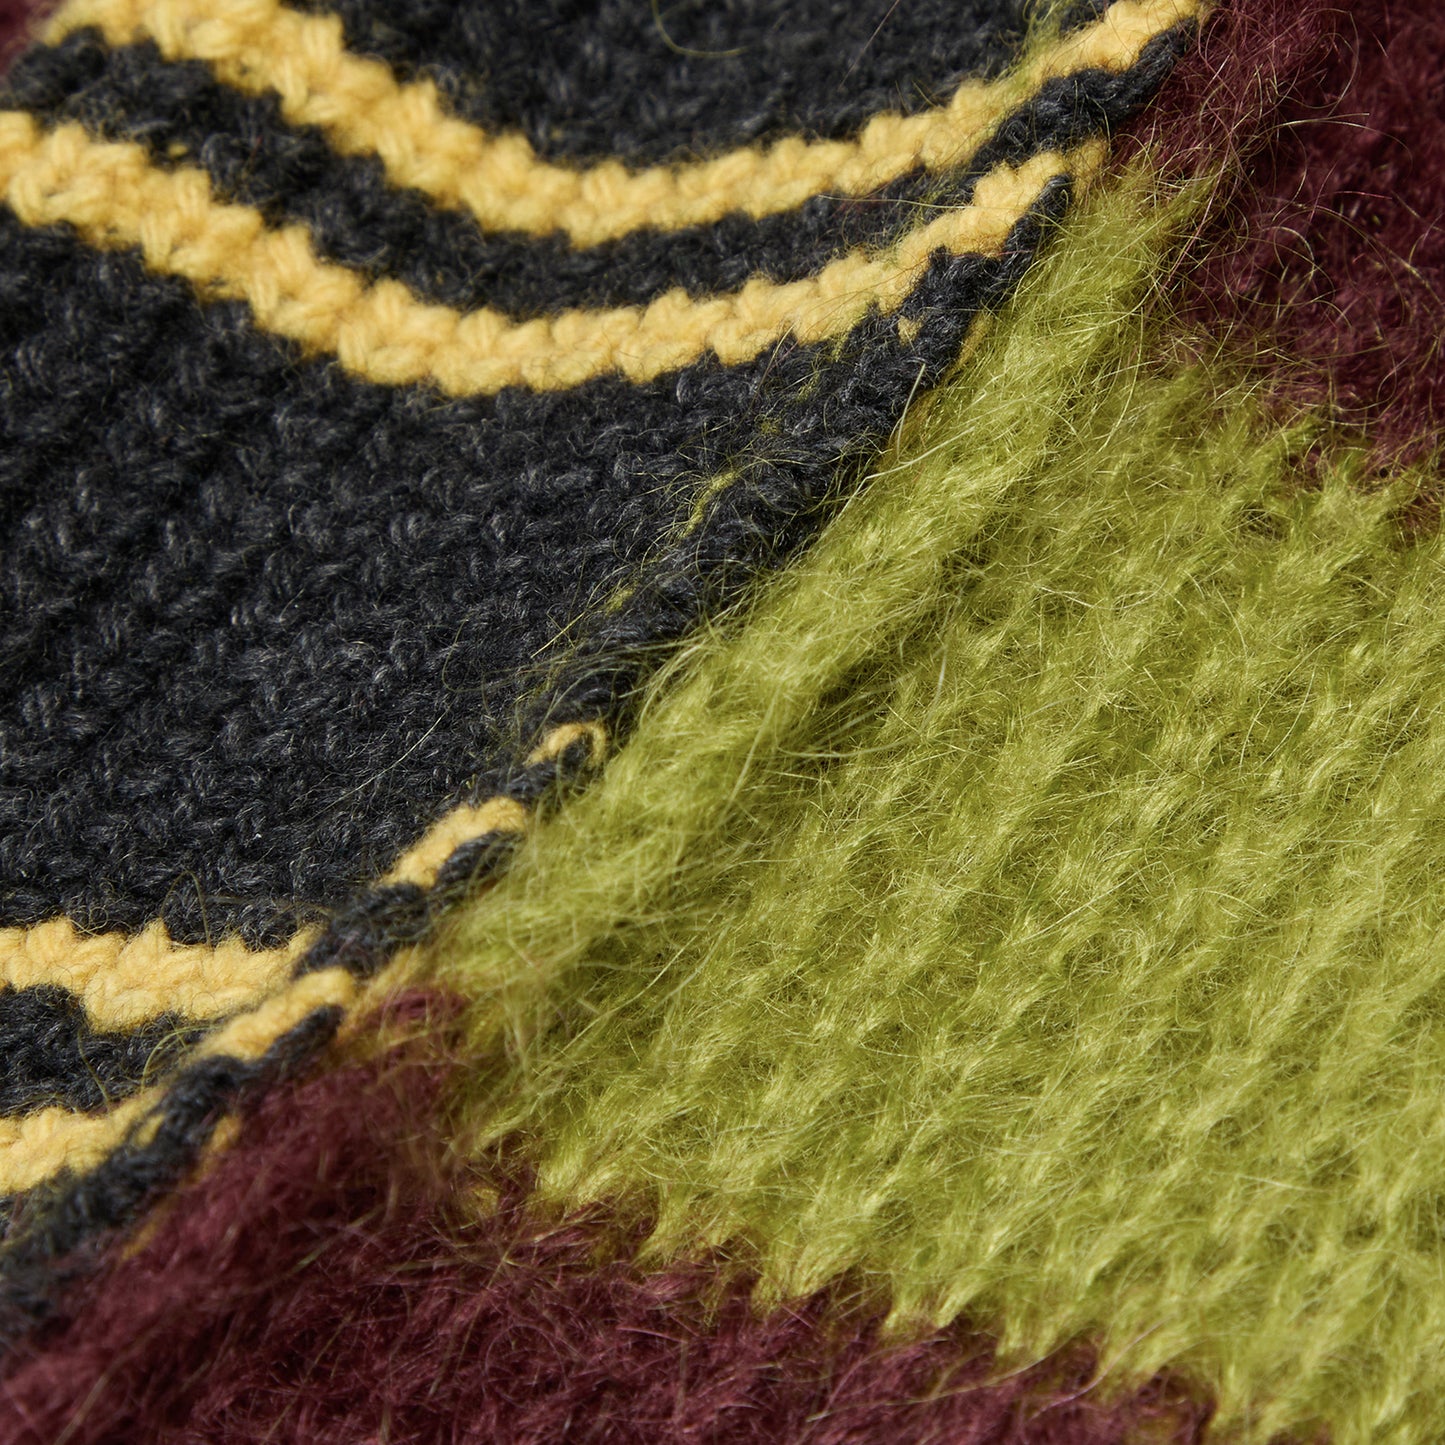 MARNI Reversible Double Stripe Crewneck Sweater (Green Lime)